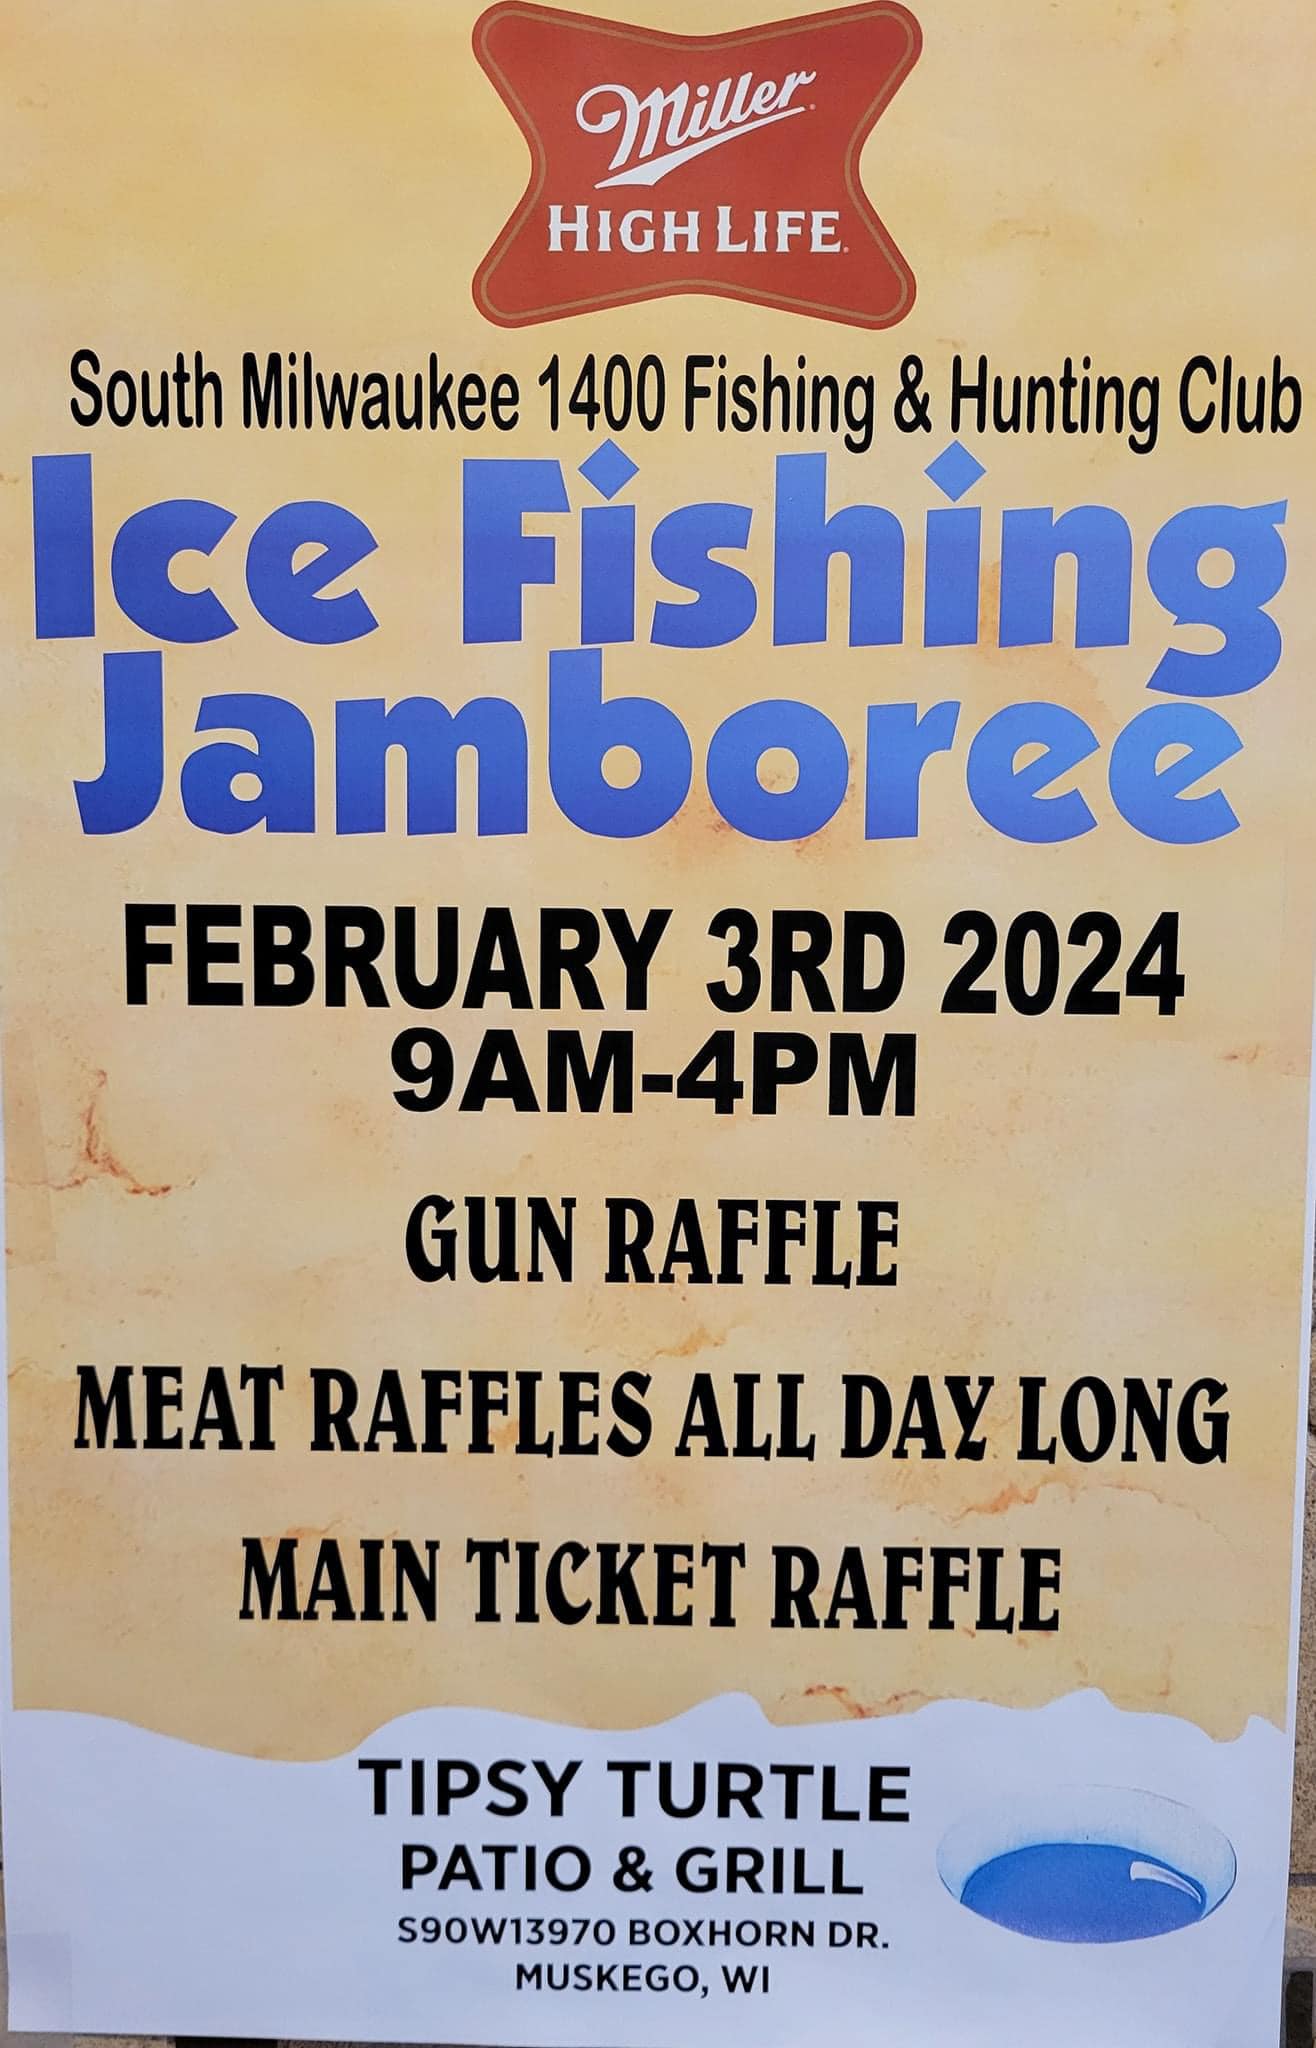 https://s17661.pcdn.co/wp-content/uploads/2024/01/South-Milwaukee-1400-Fishing-Hunting-Club.jpg